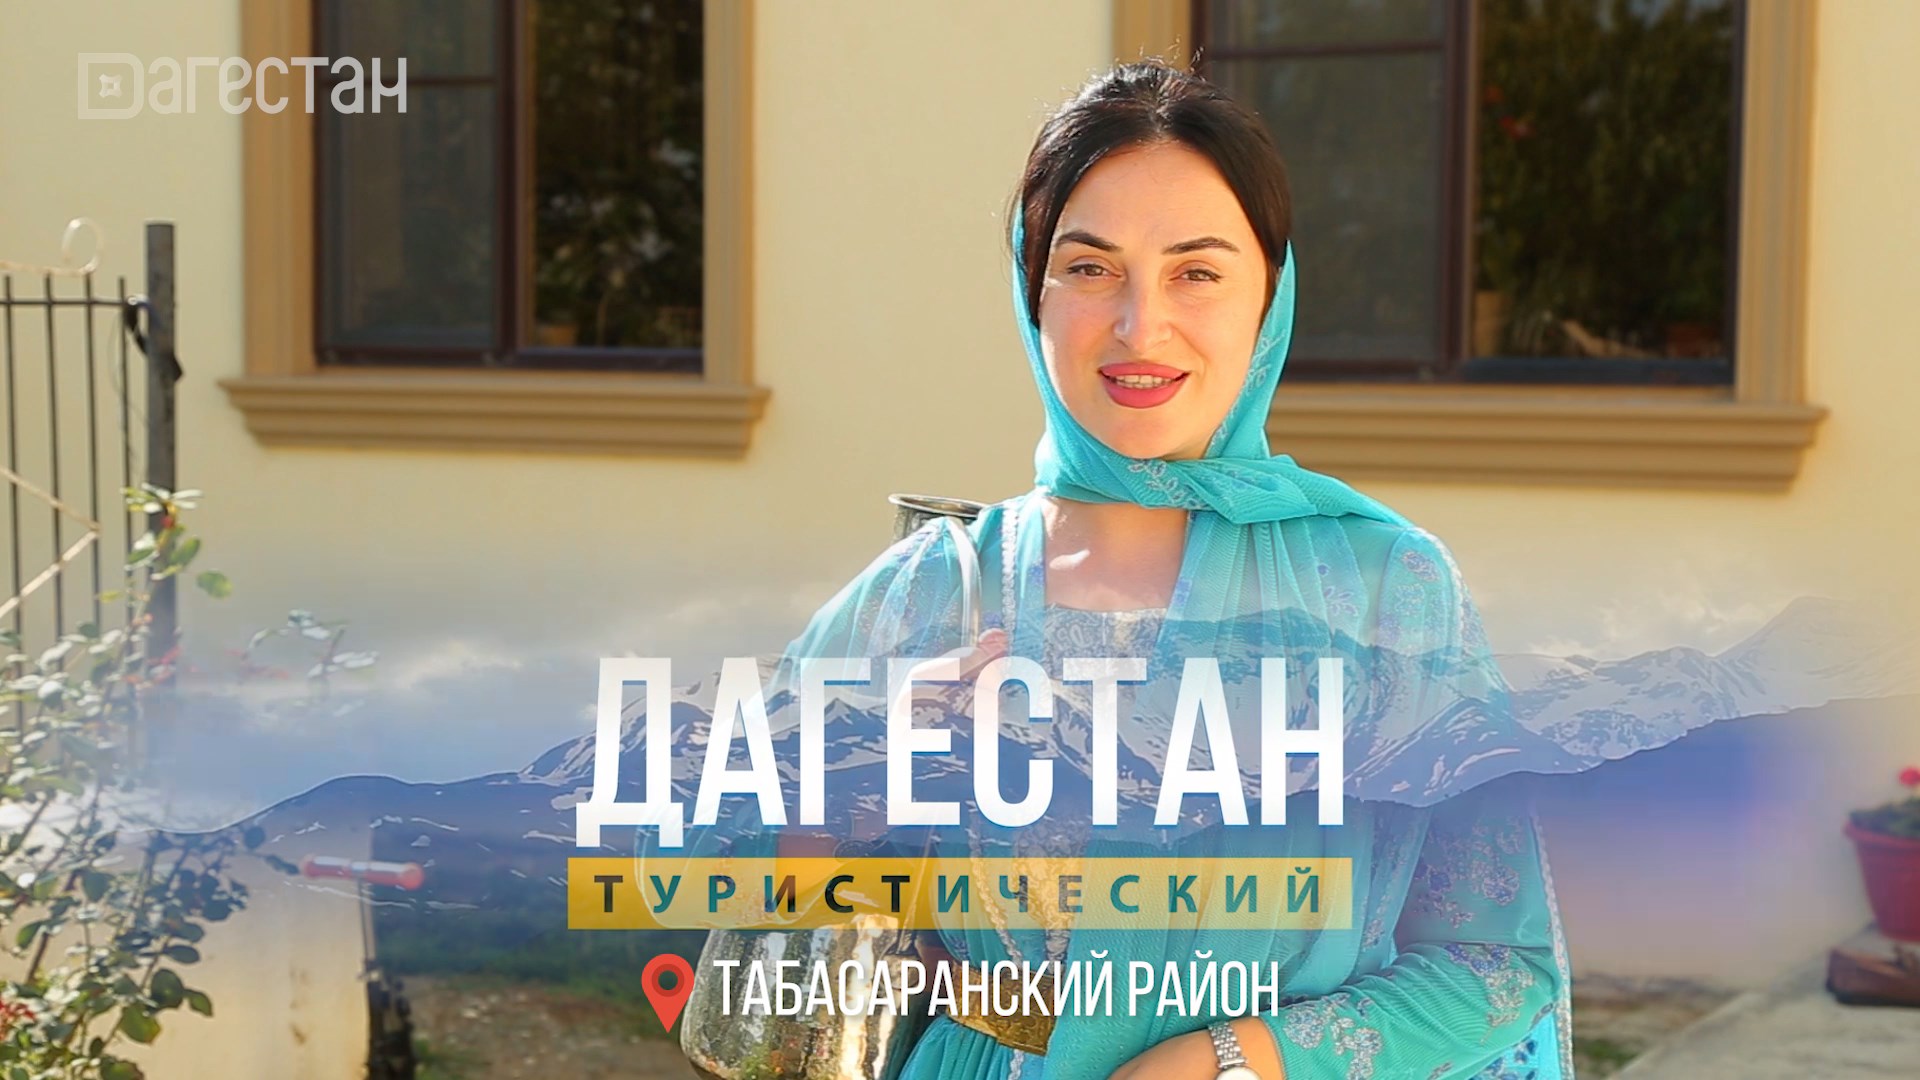 Дагестан туристический. Табасаранский район